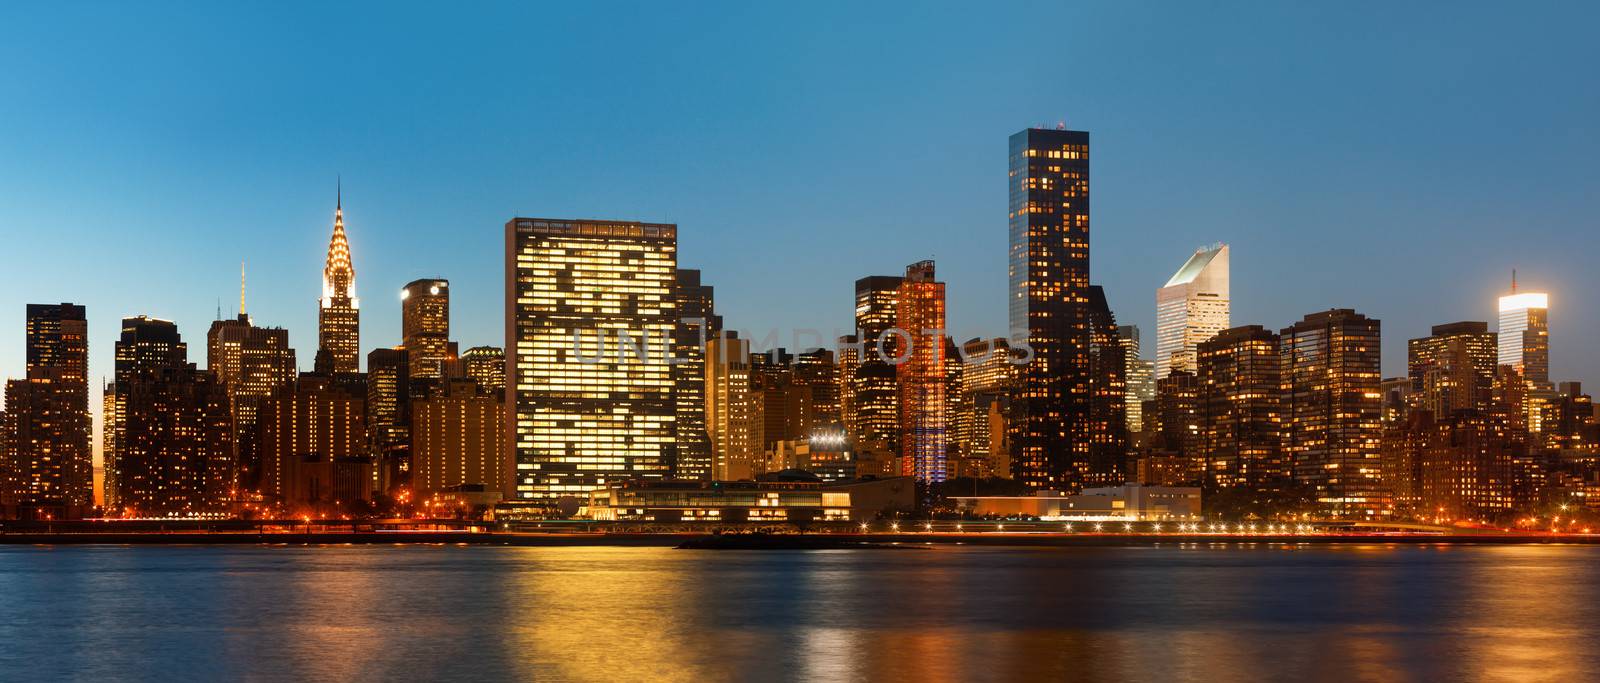 Manhattan. Late evening New York City skyline panorama by palinchak